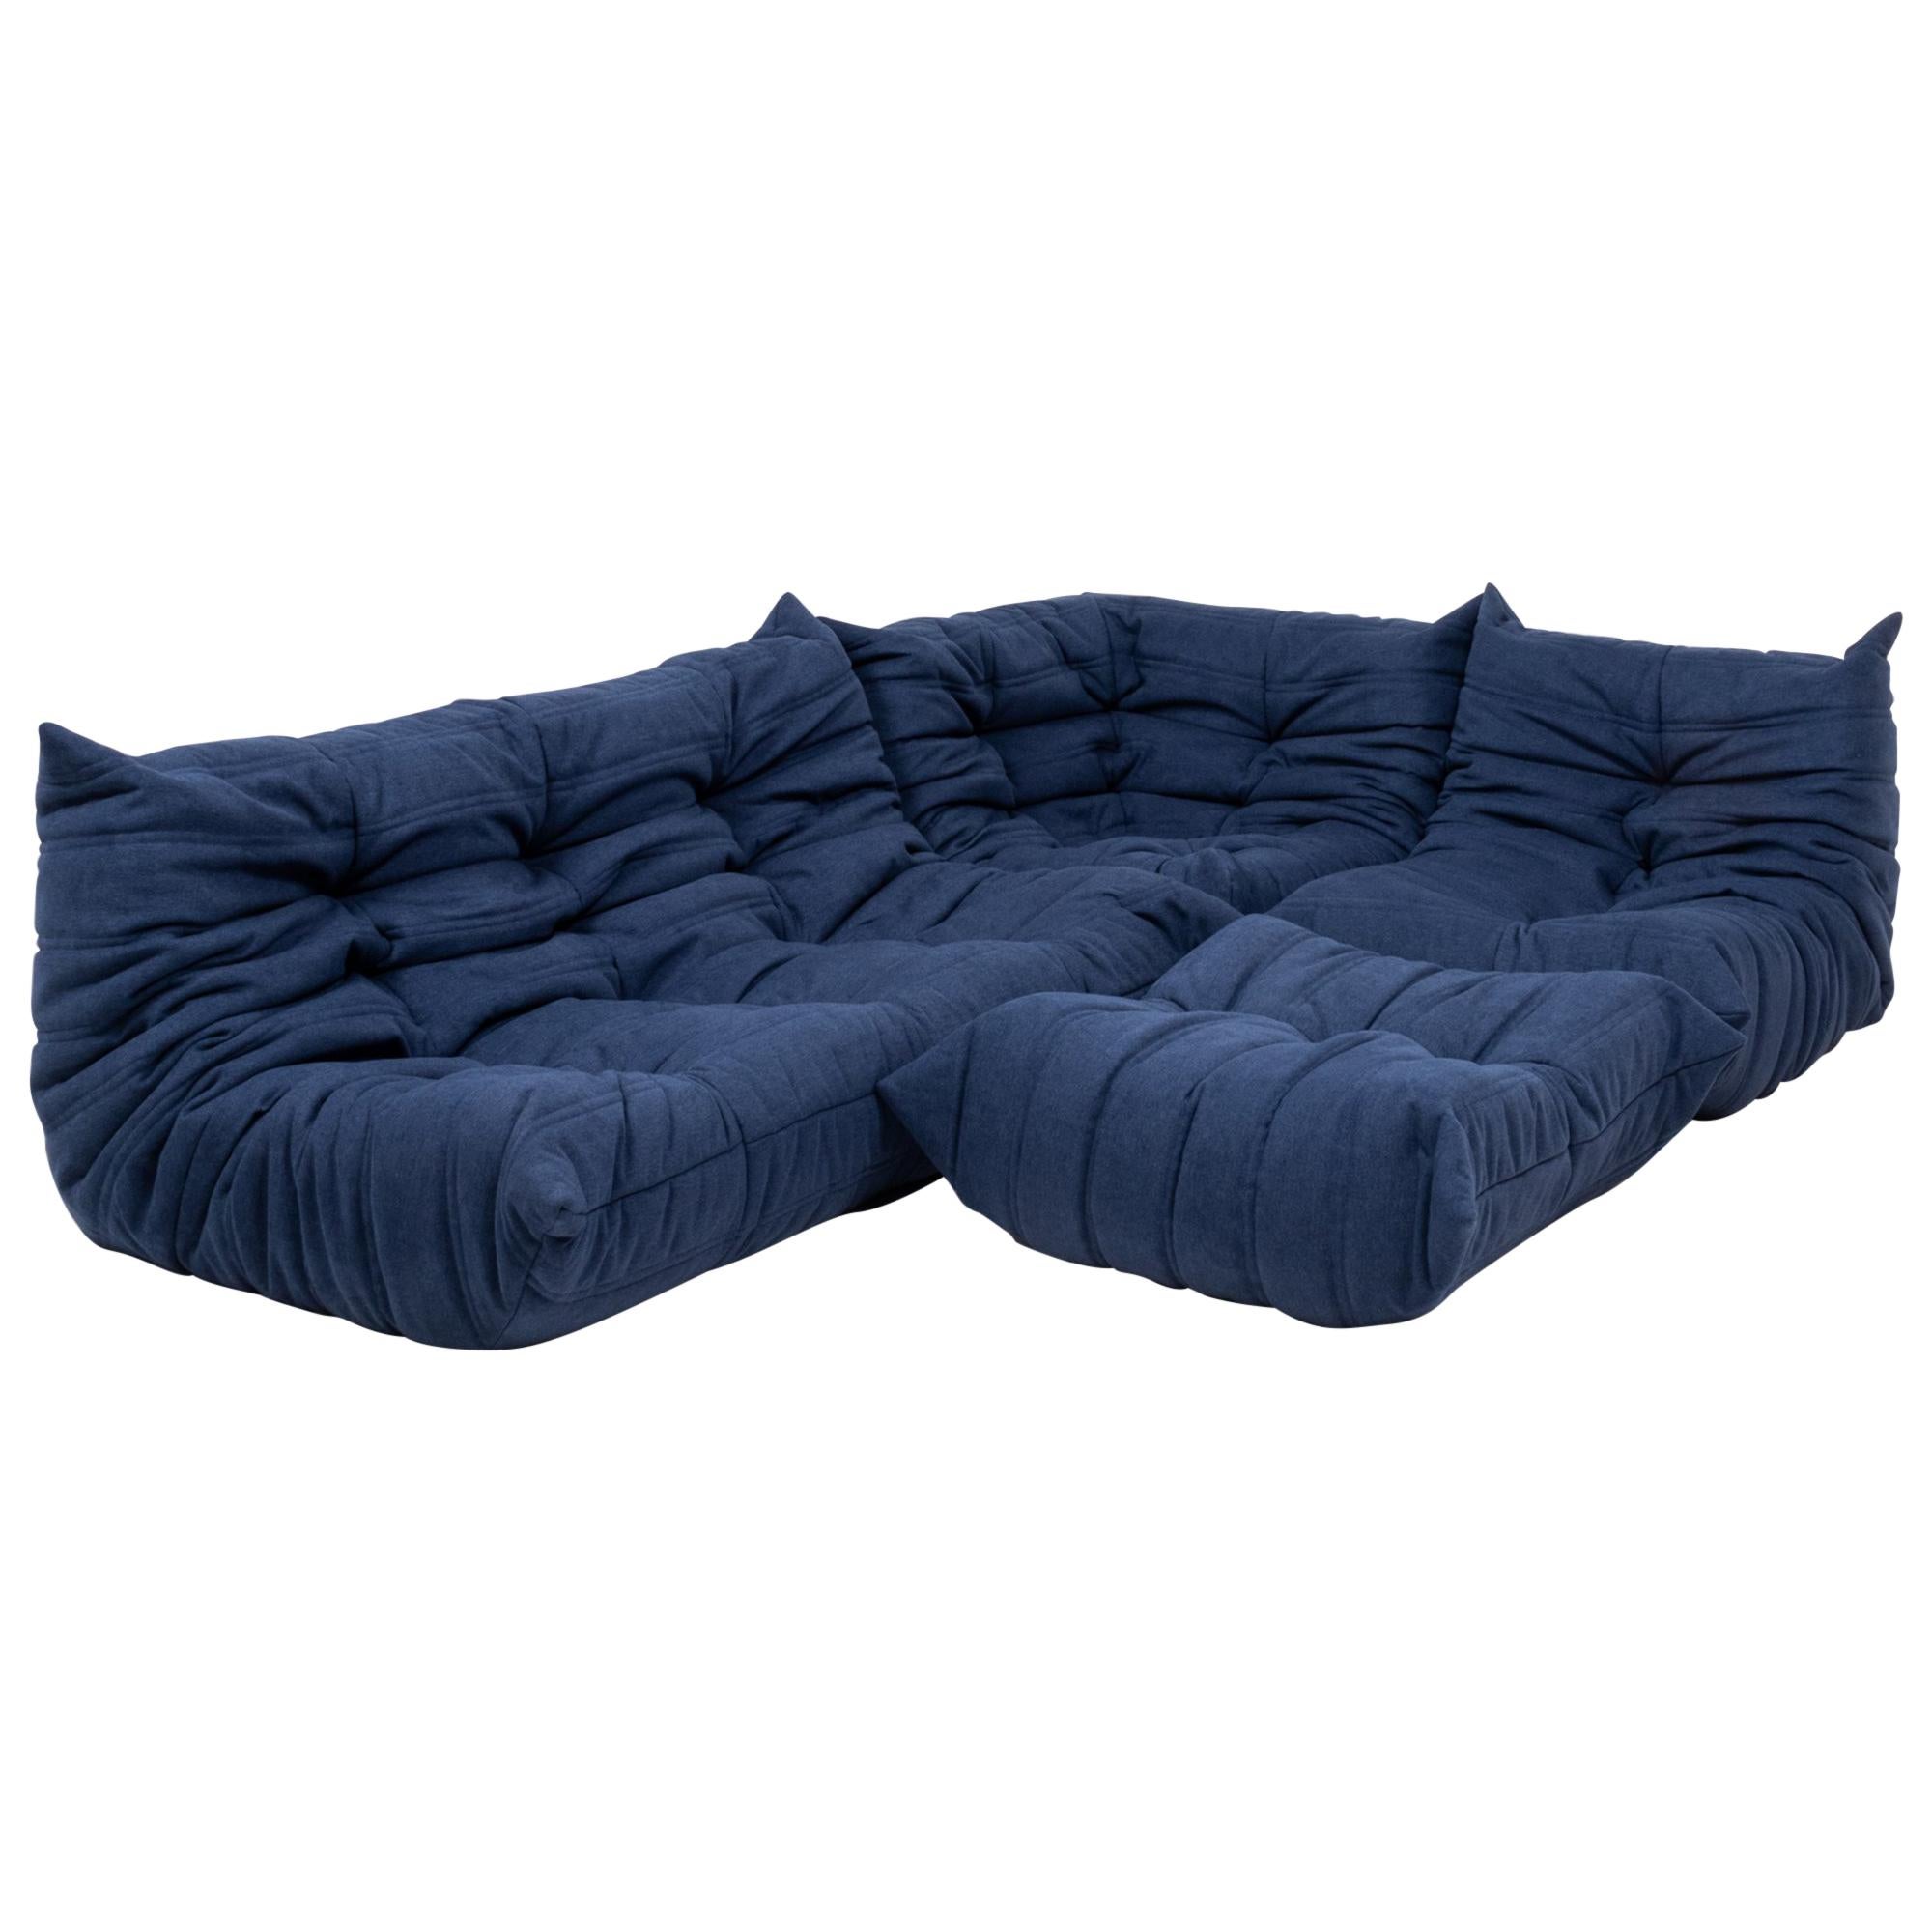 Togo Blue Modular Sofa and Footstool by Michel Ducaroy for Ligne Roset, Set of 4